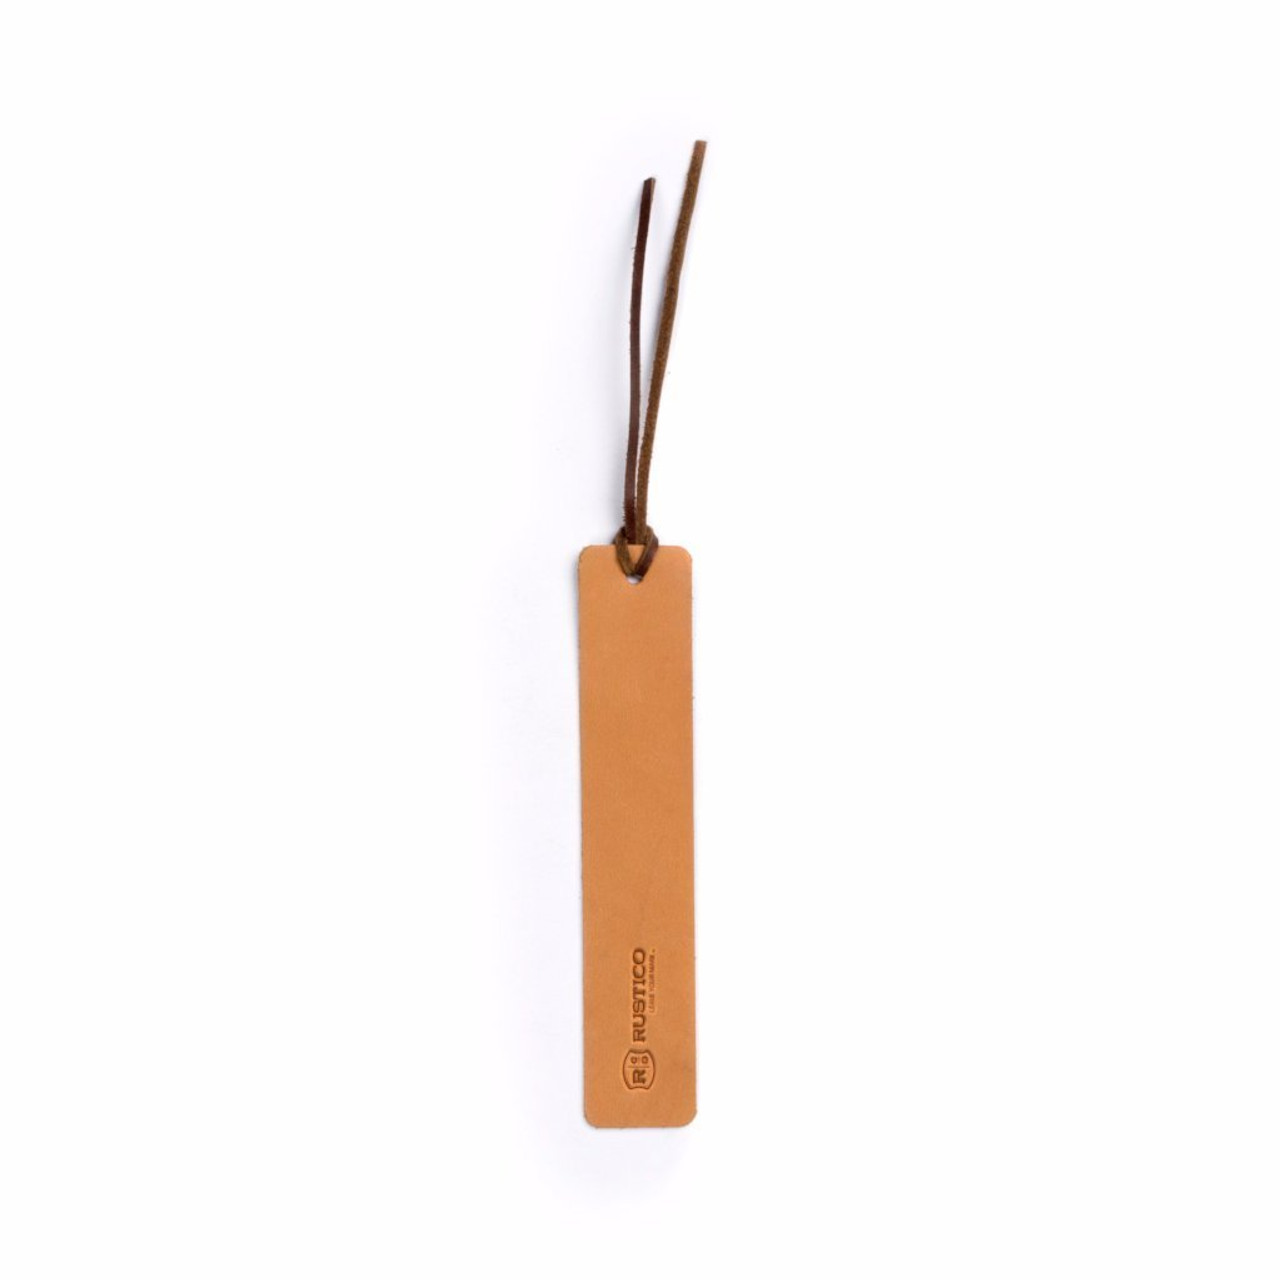 Buckskin Leather Bookmark - Engravable